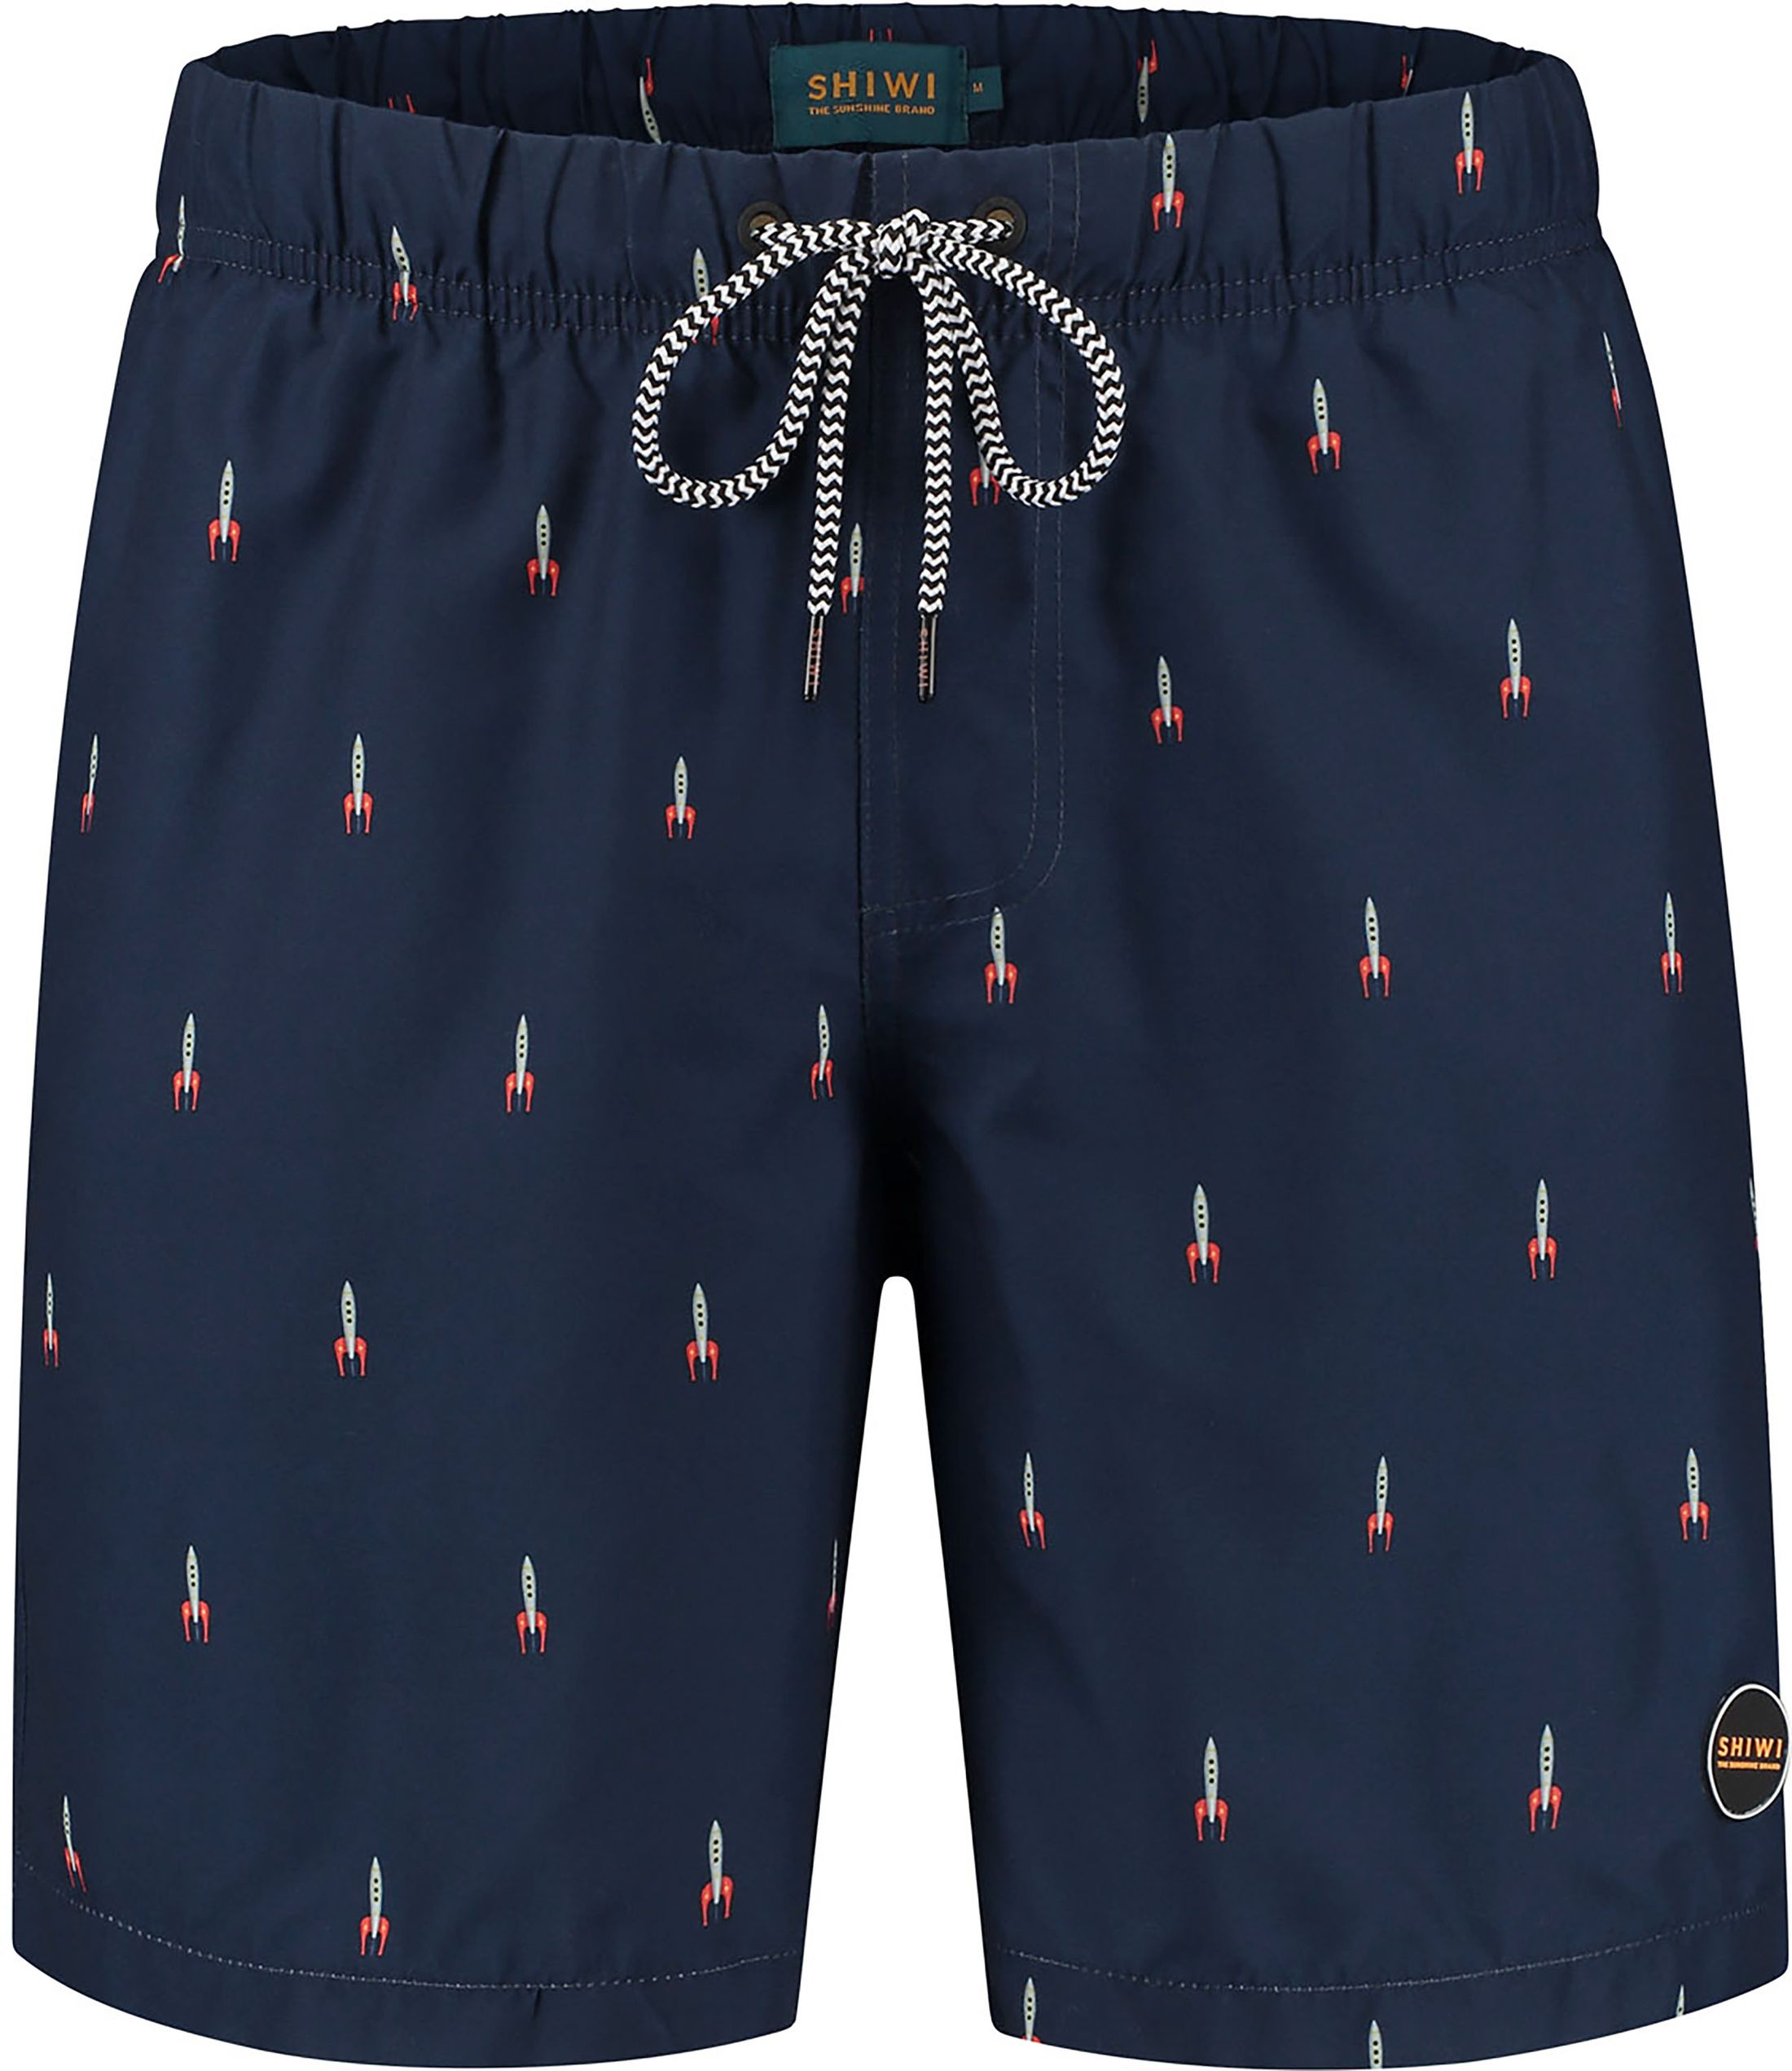 Shiwi Swimshorts Rocket Navy Blue Dark Blue size L